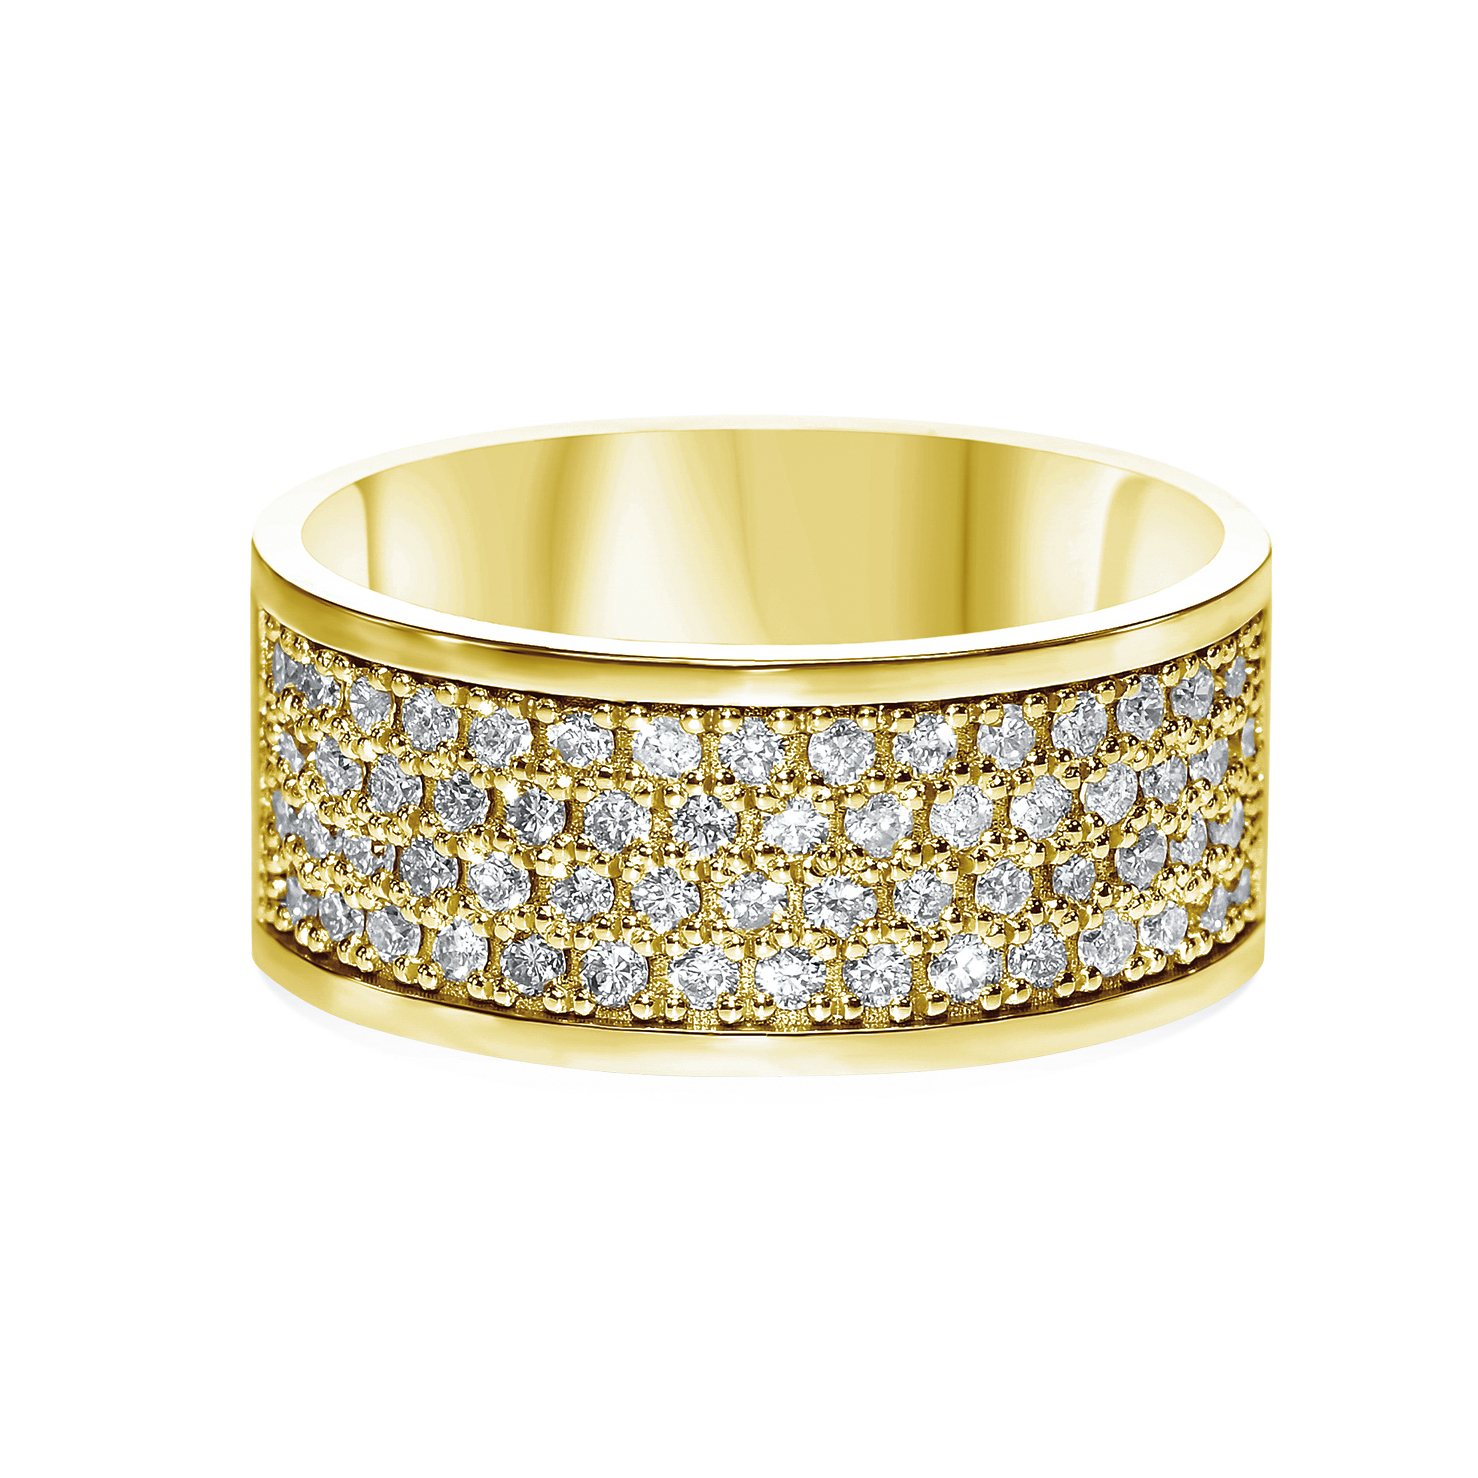 Eternity Ring in 14K Yellow Gold with 1 carat Diamonds - יהלומי הבורסה